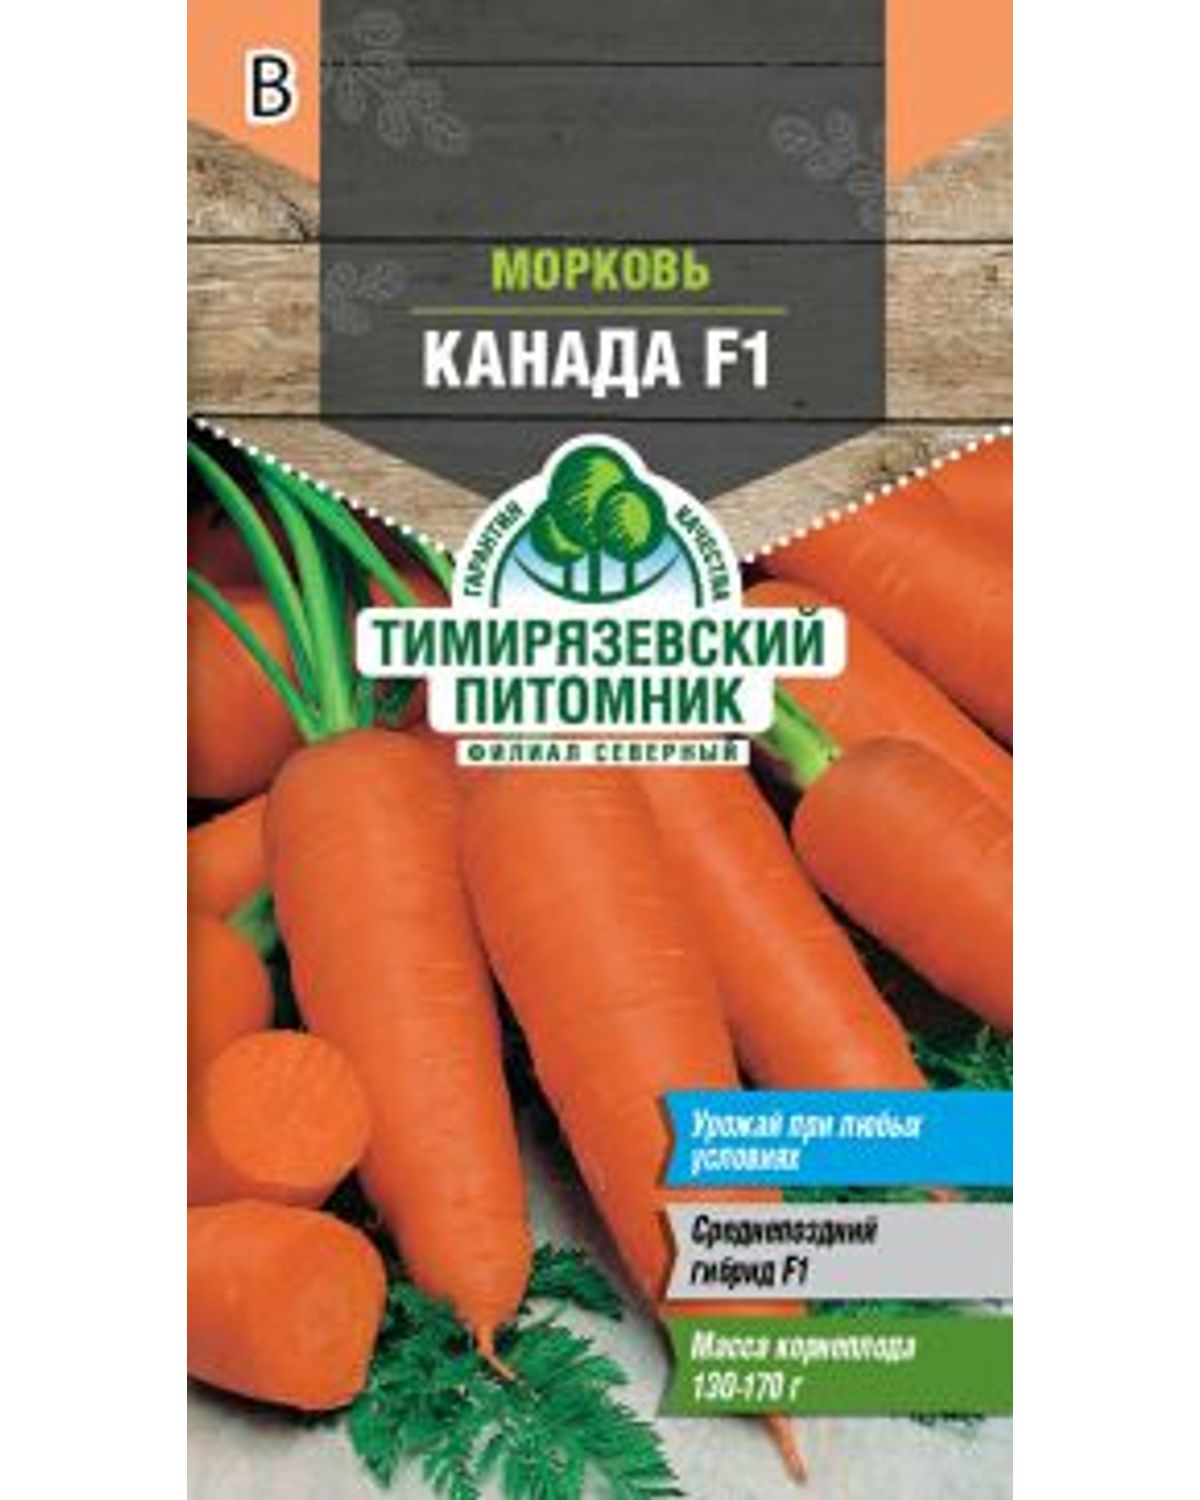 Семена морковь Тимирязевский питомник Канада F1 63095 1 уп.